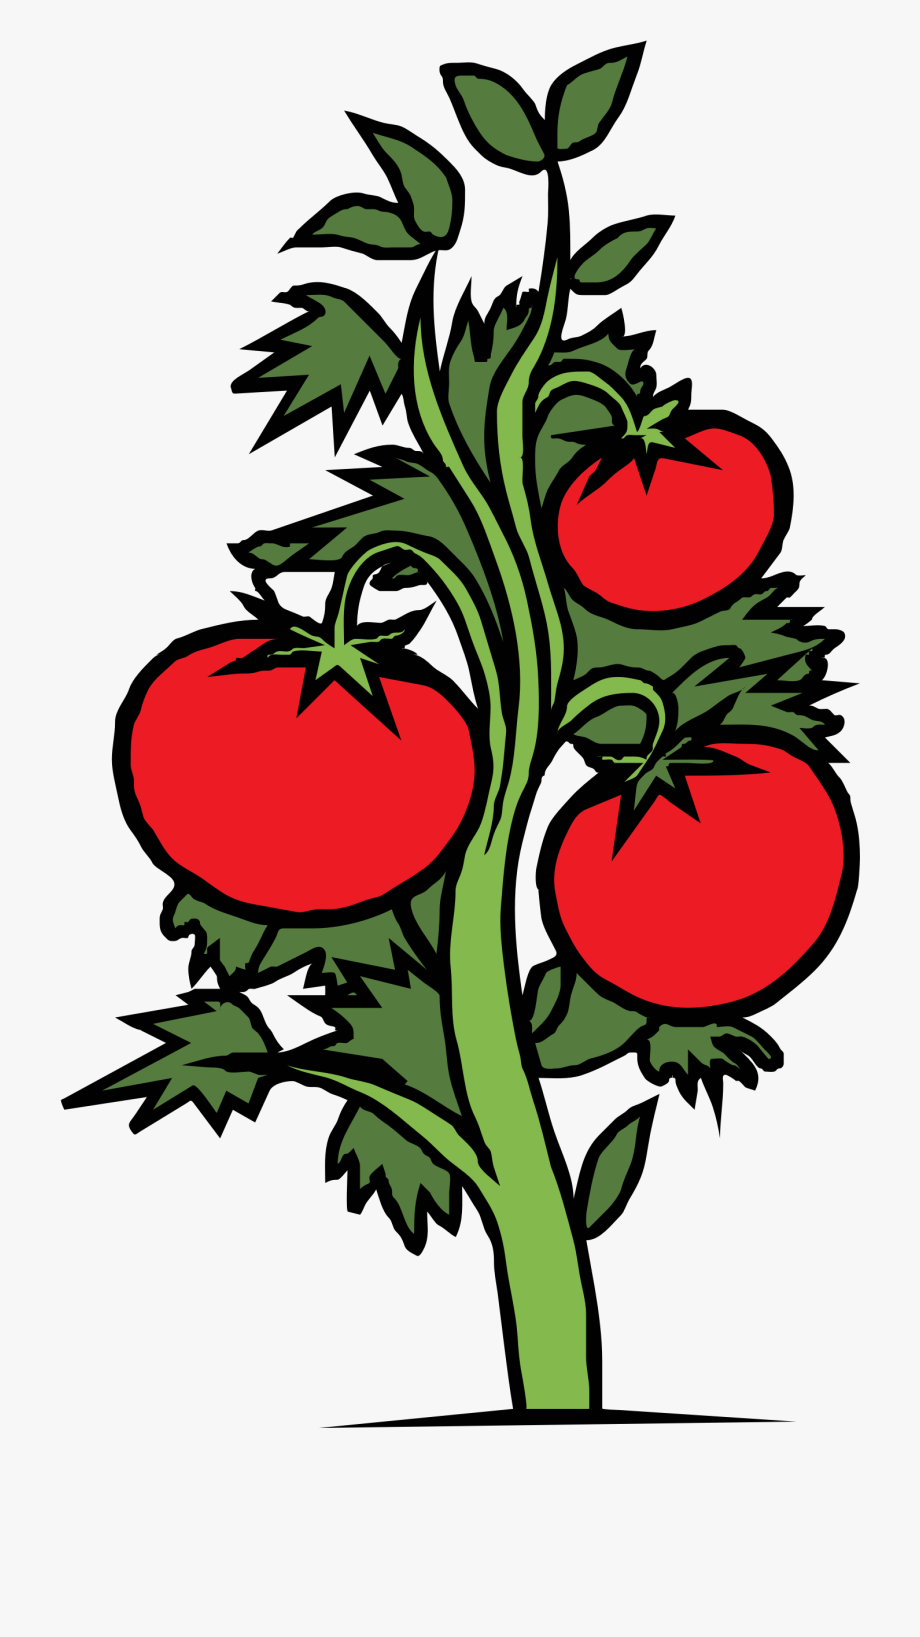 Drawn tomato vine.